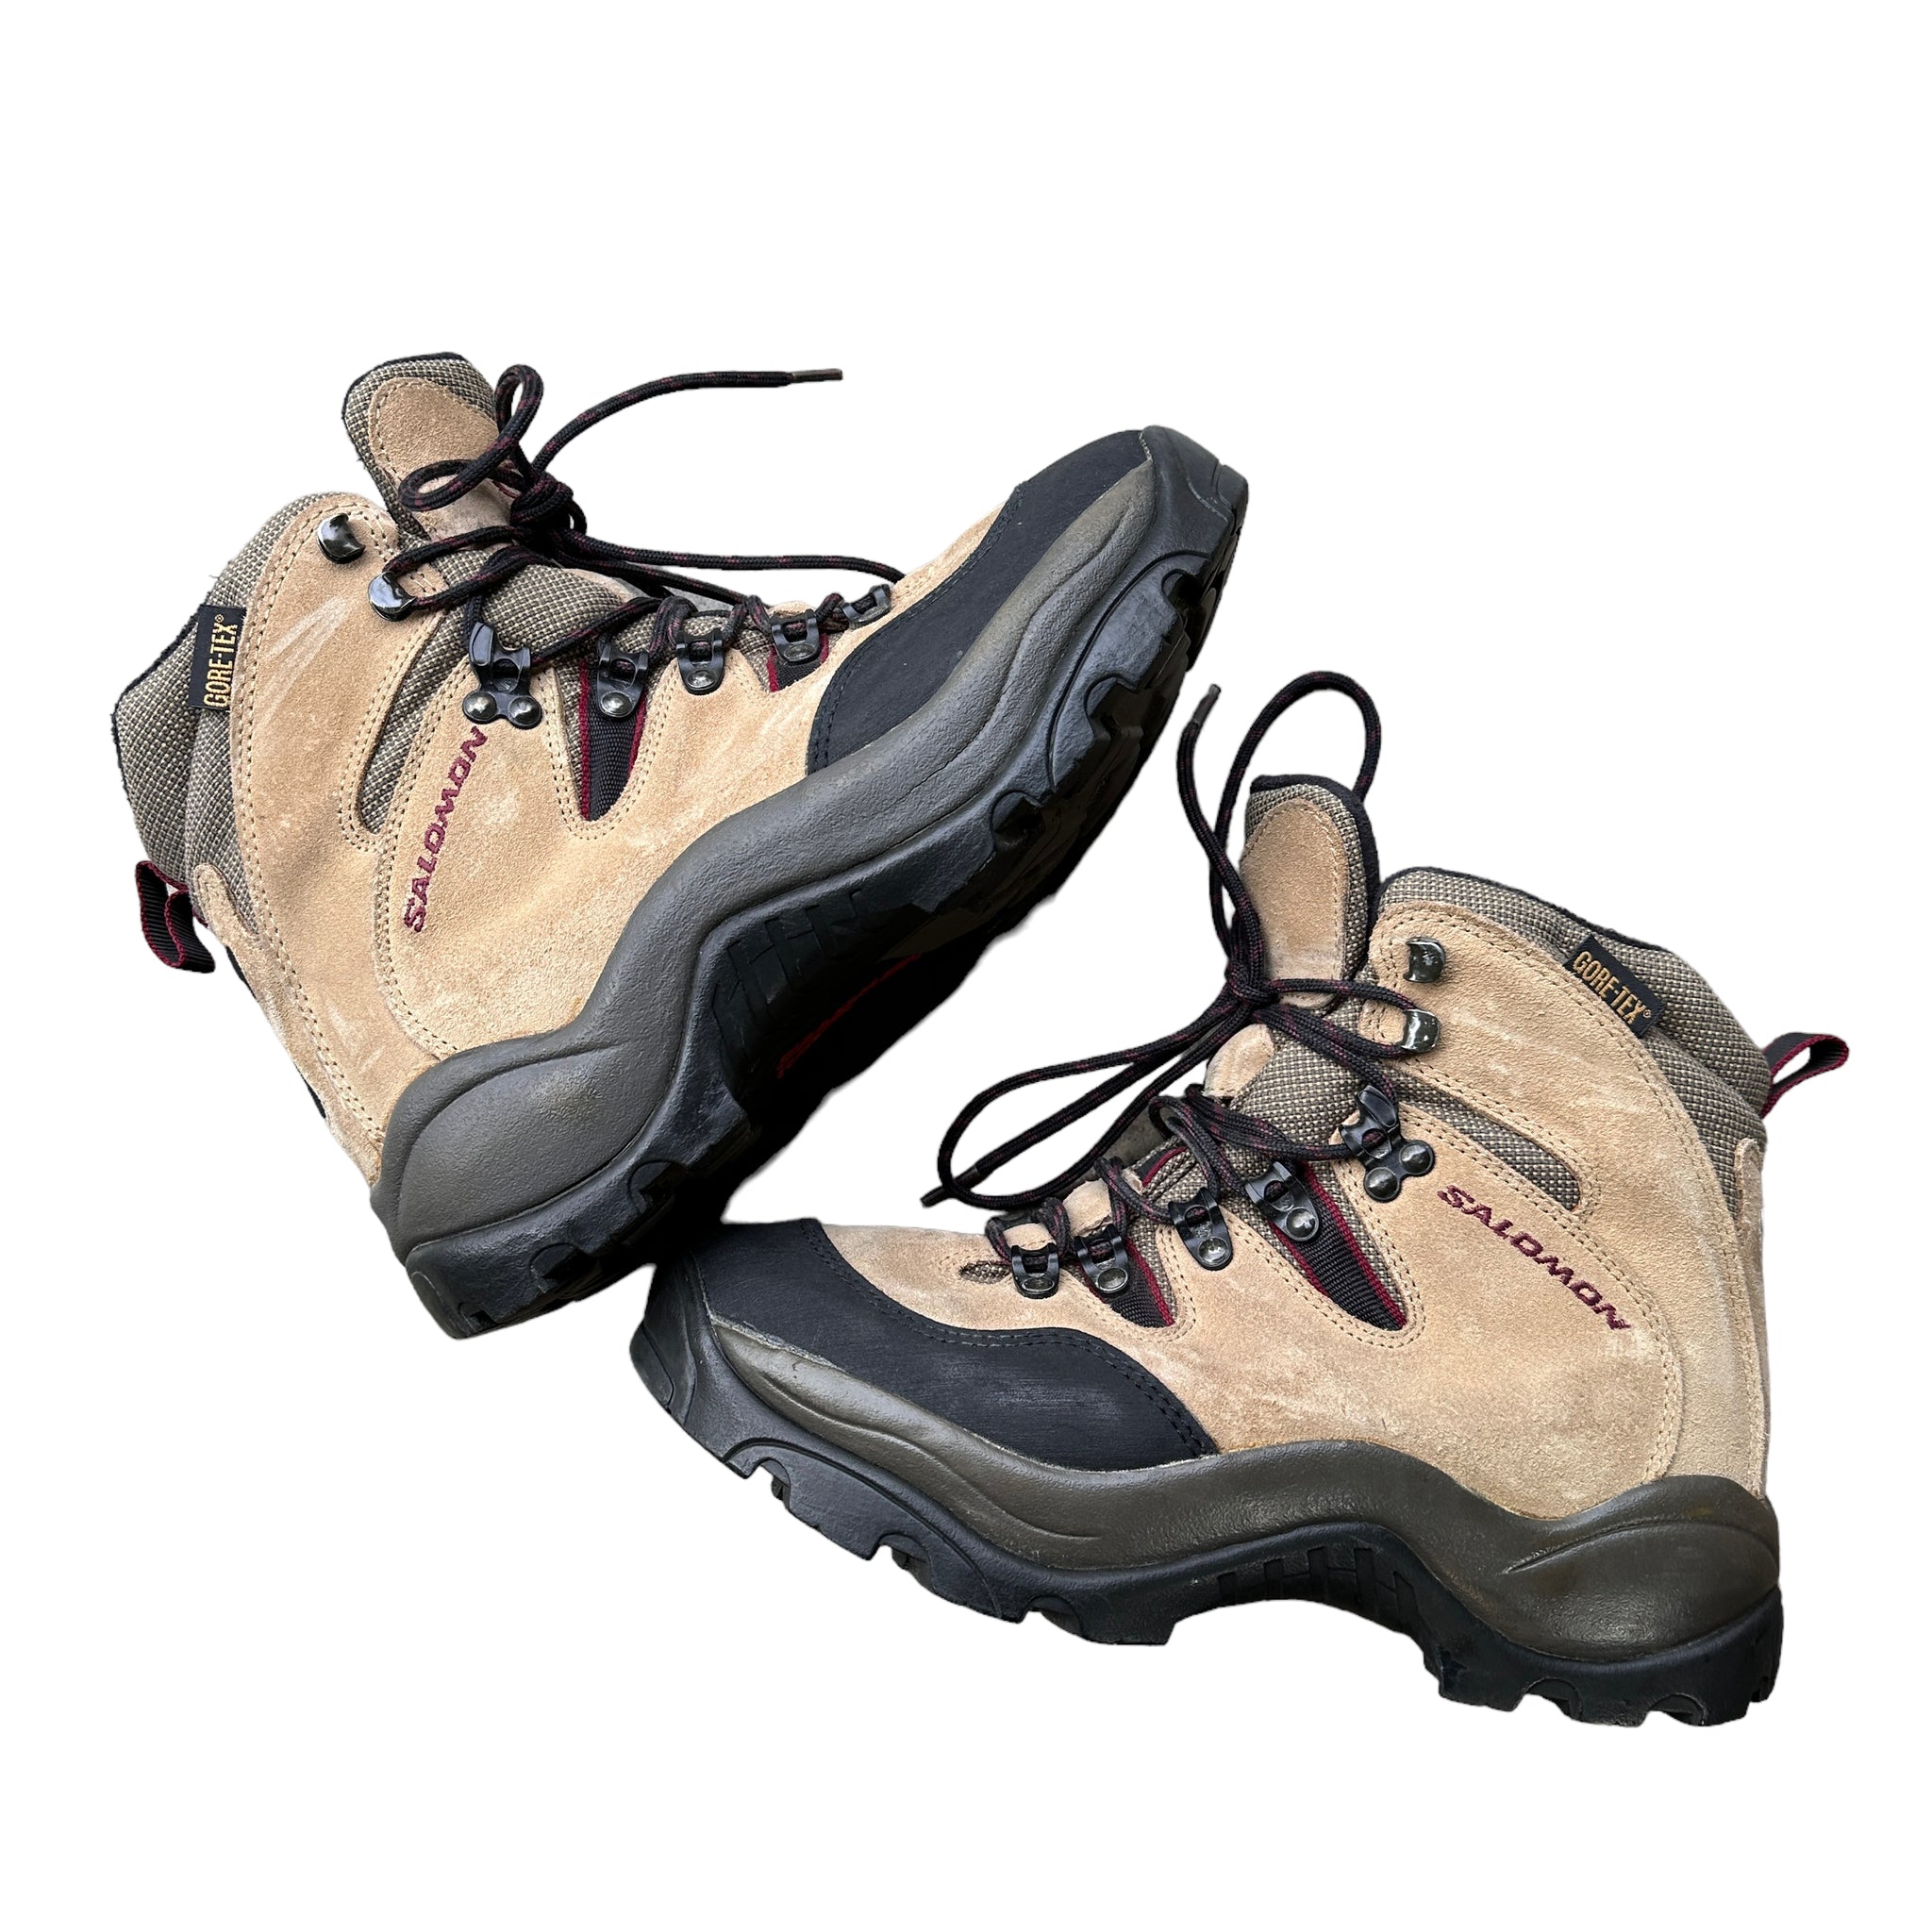 90s Salomon hiking boots wmns 9.5